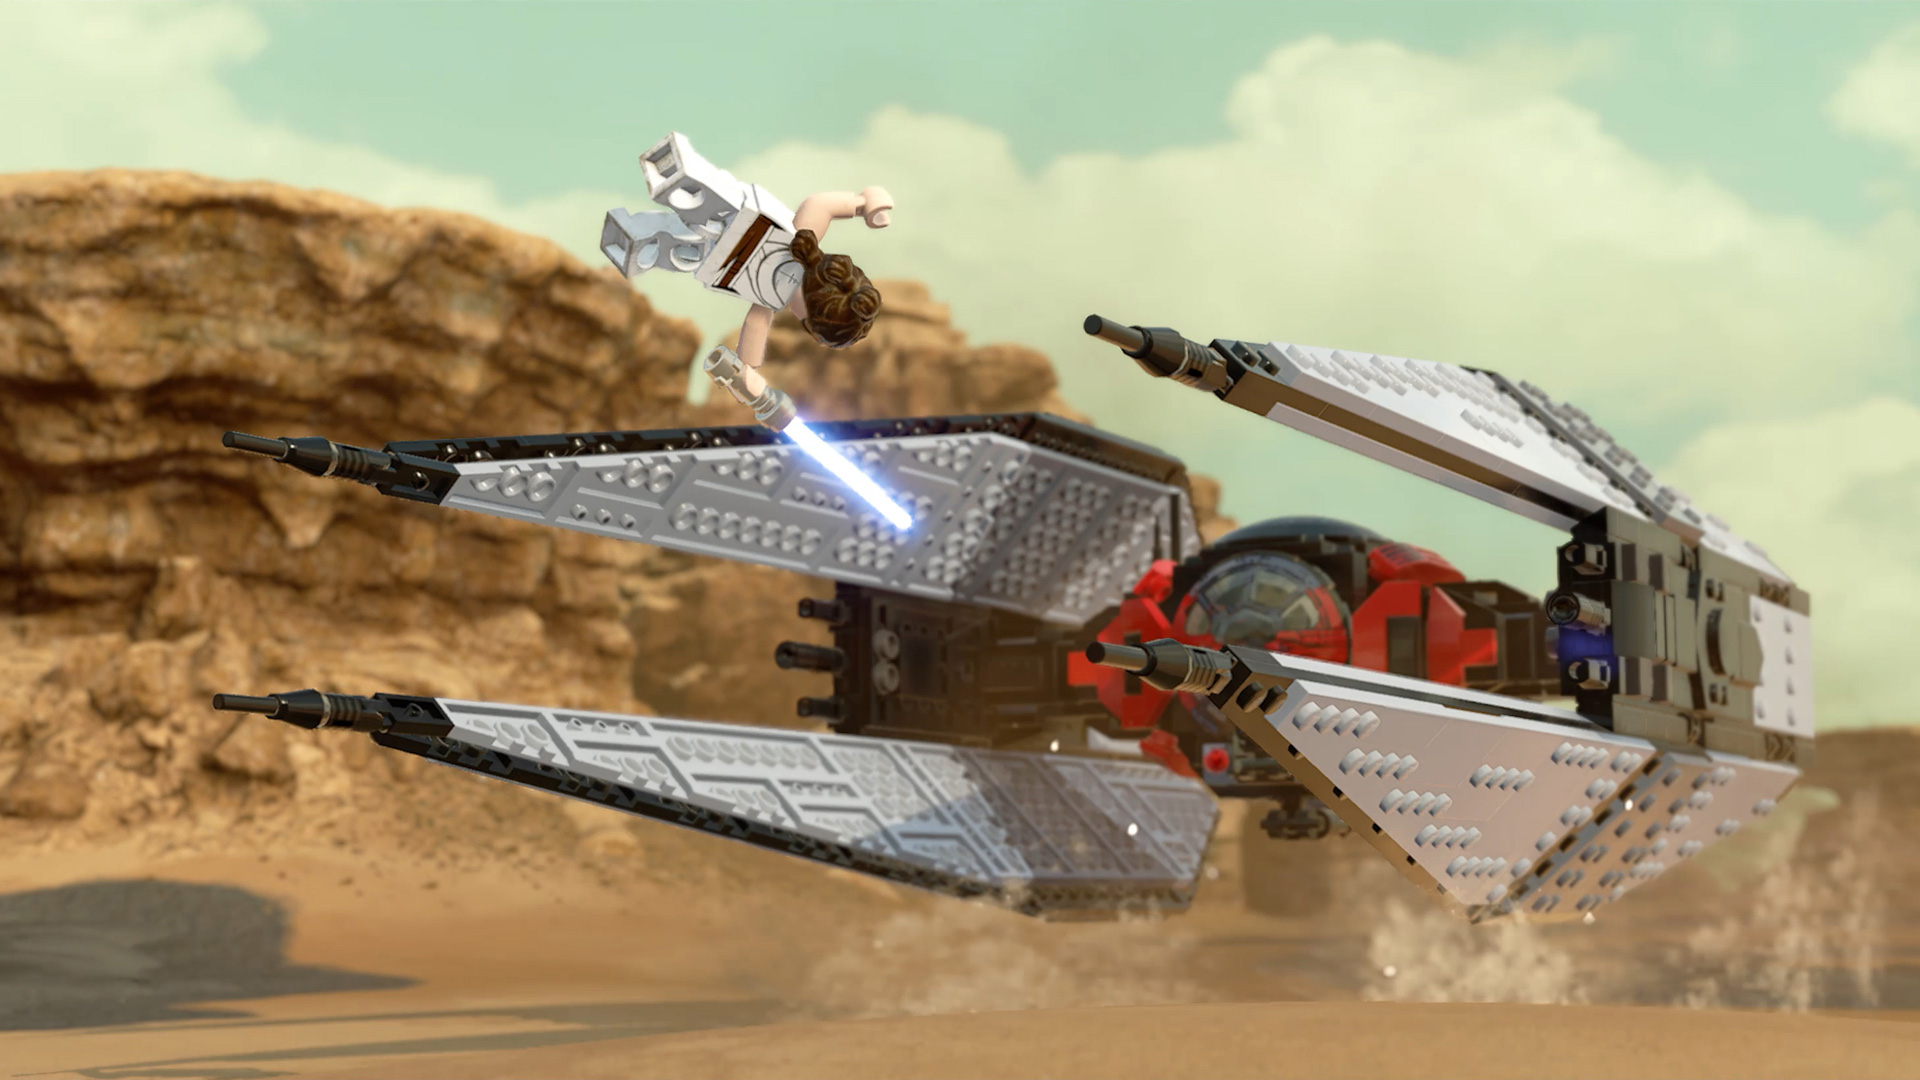 Jogo Lego Star Wars The Skywalker Saga para Nintendo Switch